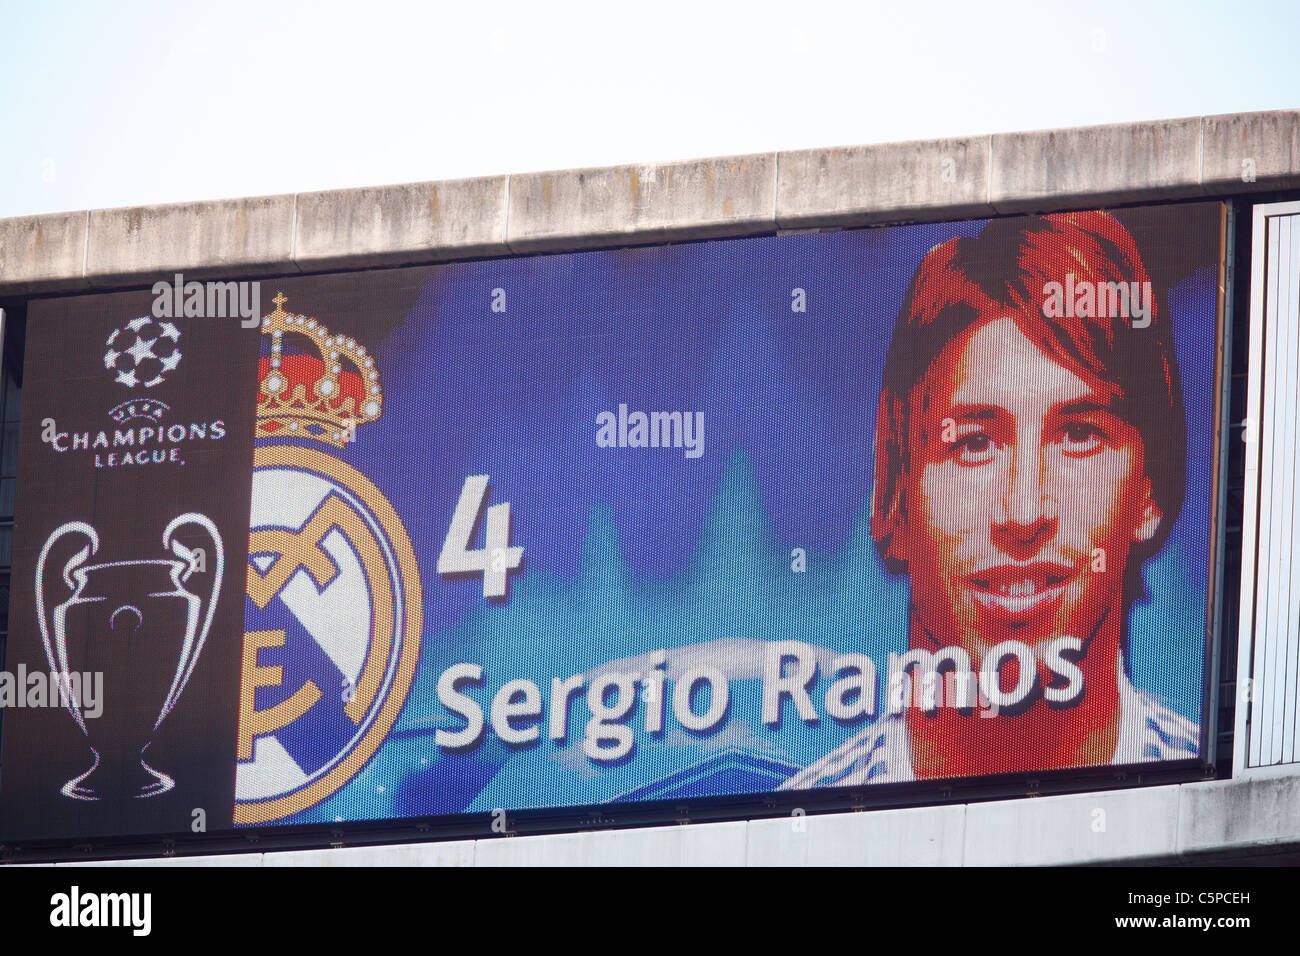 The image of Sergio Ramos on the electronic scoreboard Stock Photo